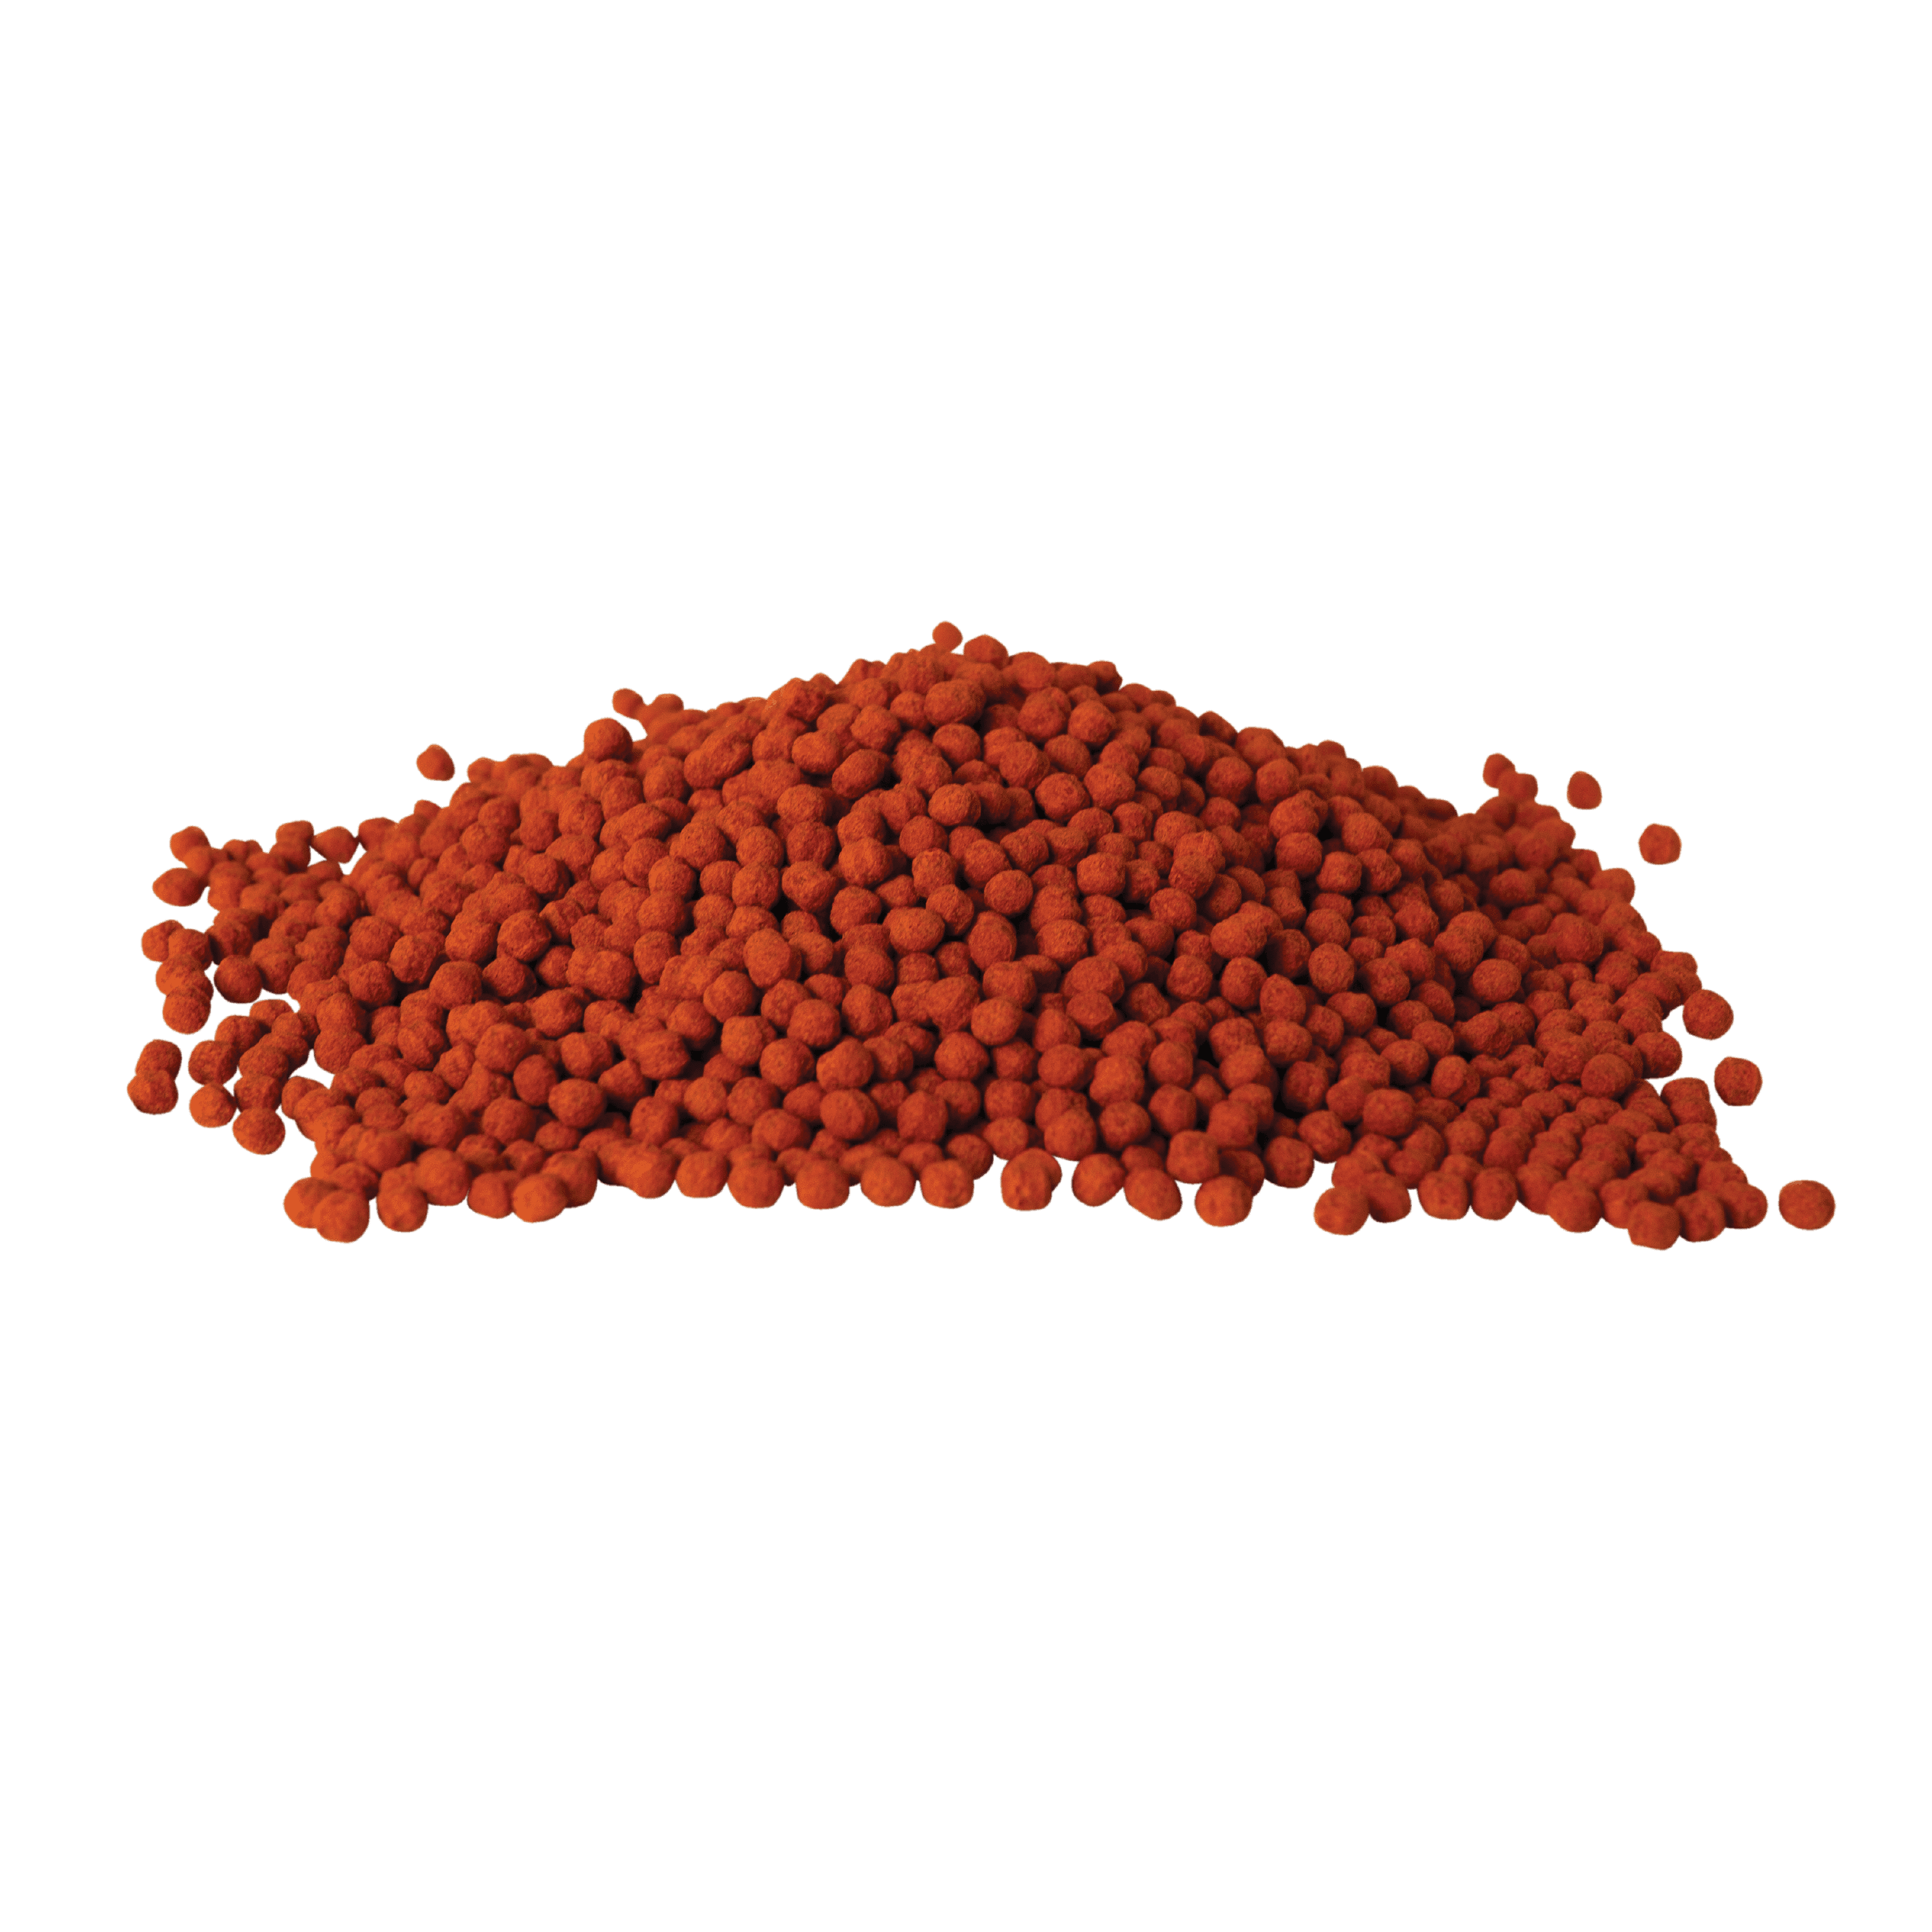 Tetra Cichlid granules 500 ml